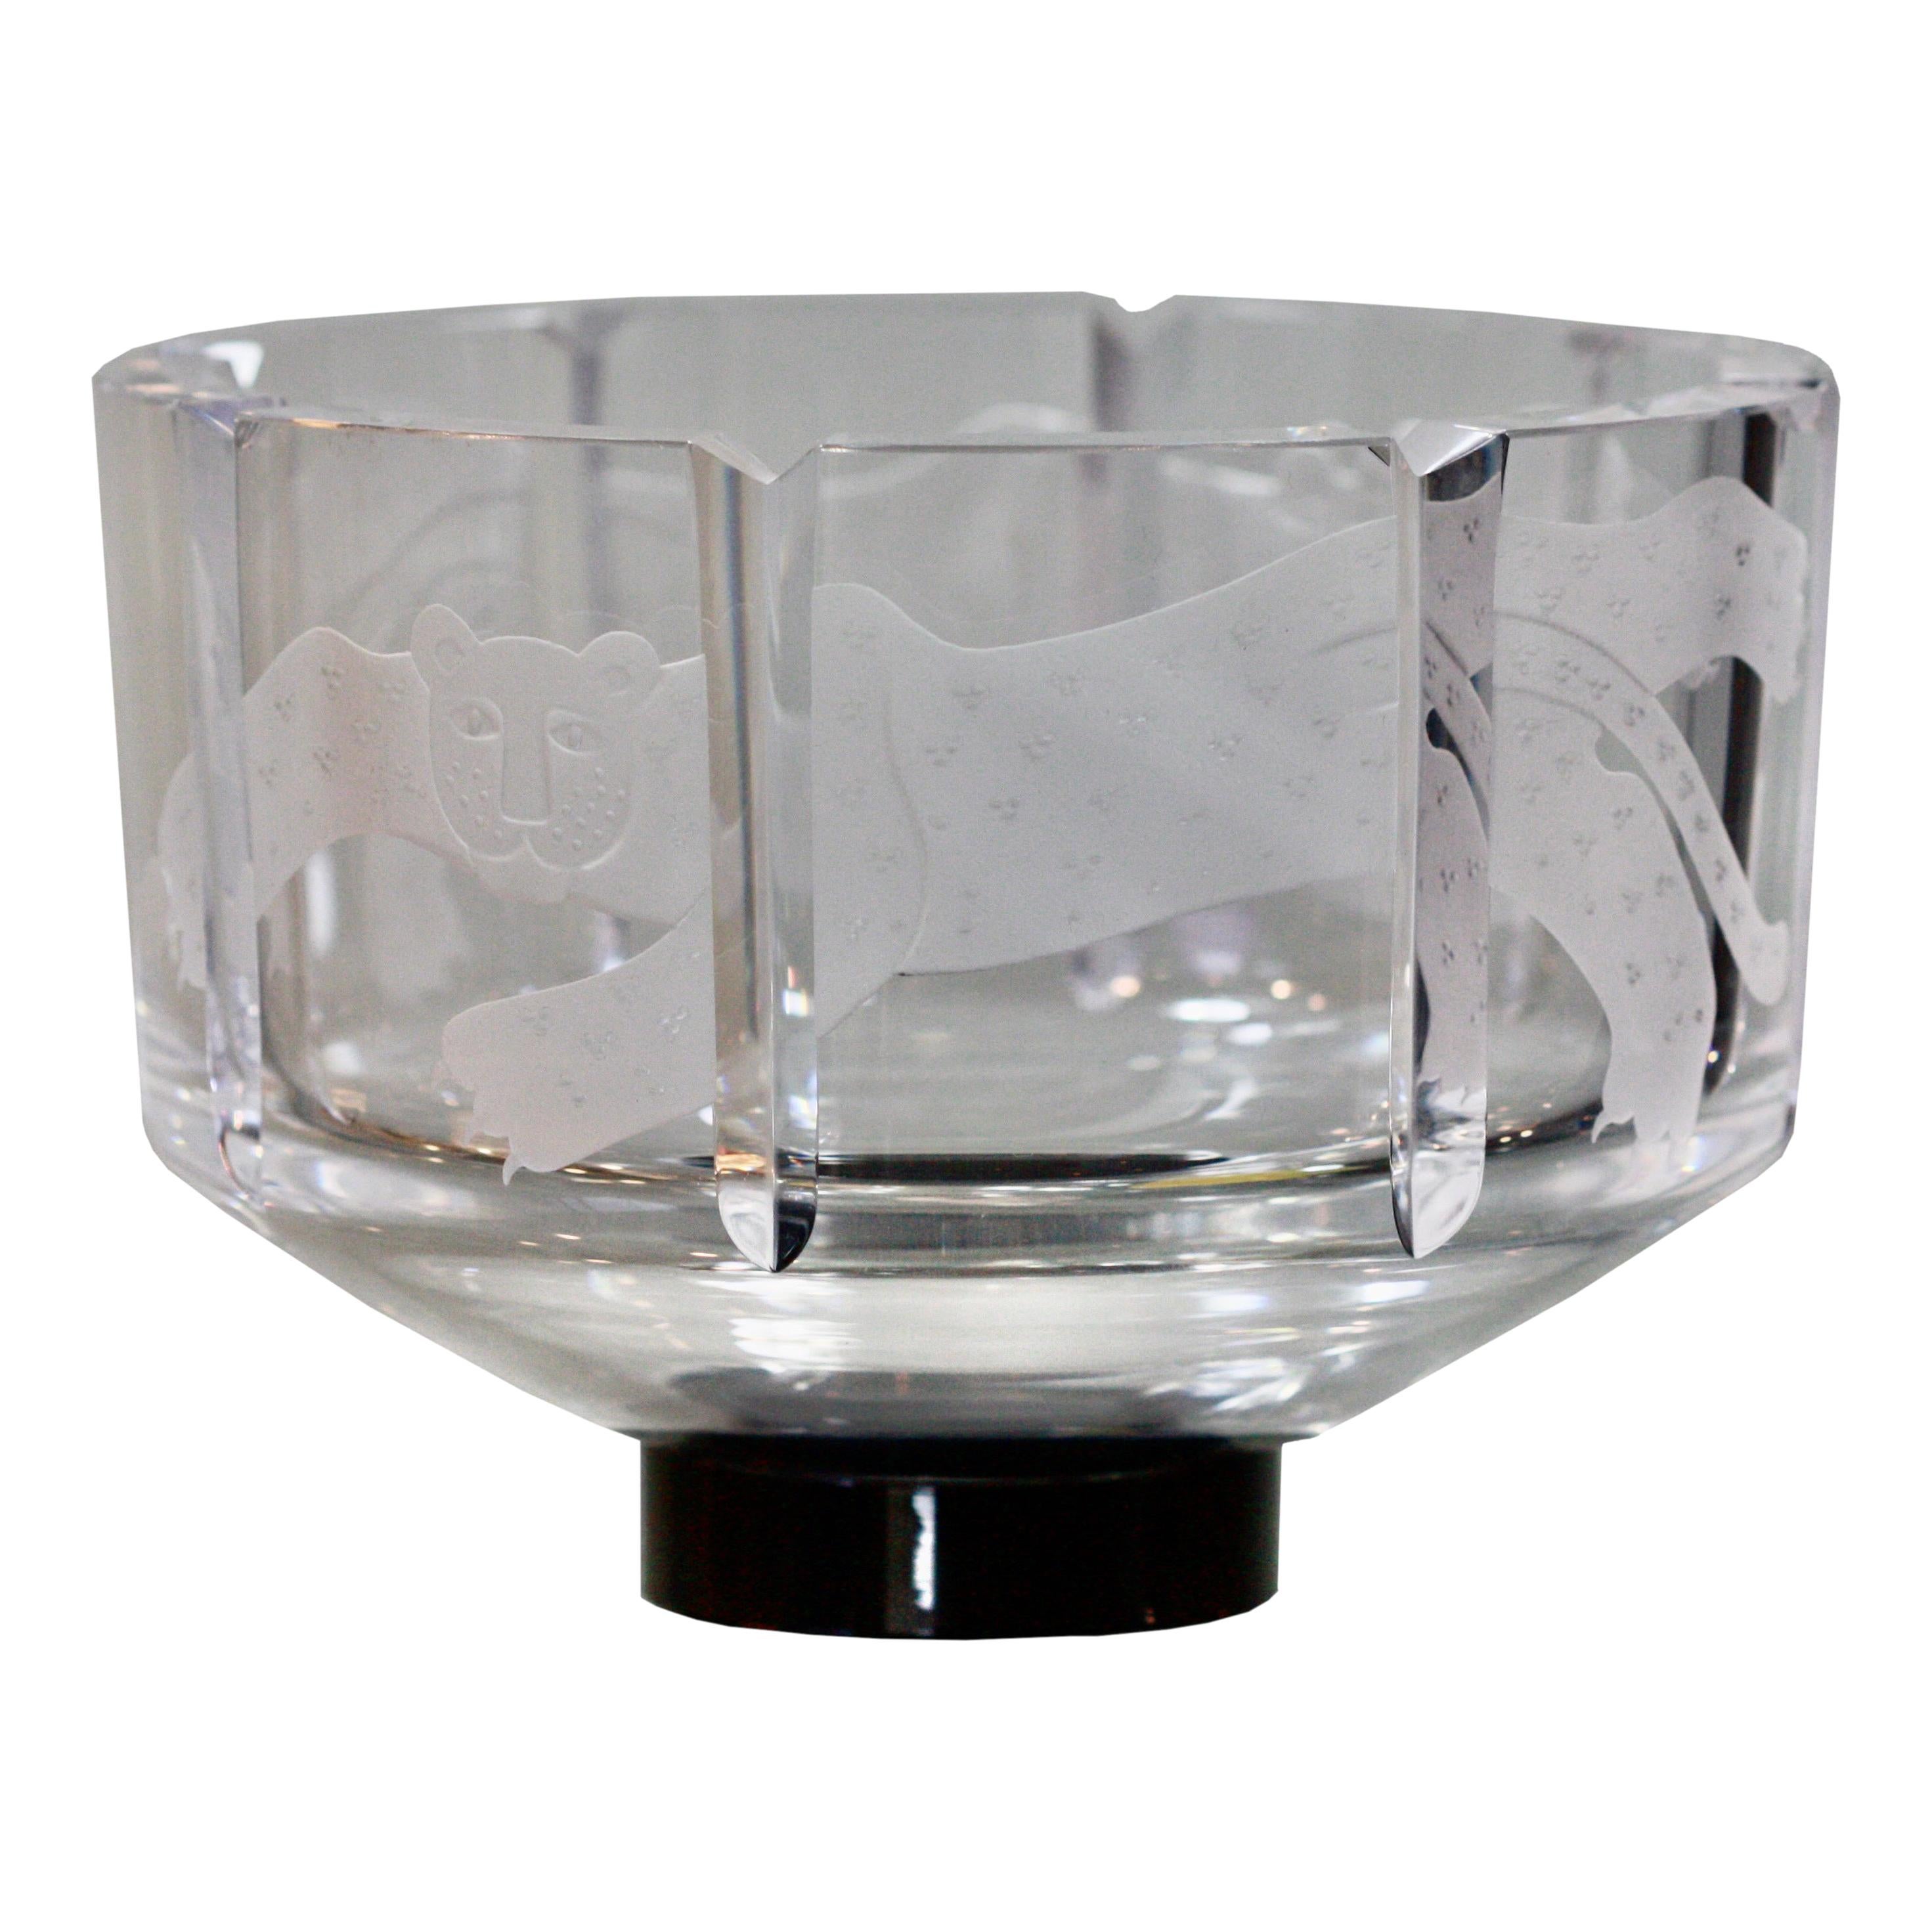 Orrefors Etched Glass 'Cat' Bowl, Designed by Gunner Cyren